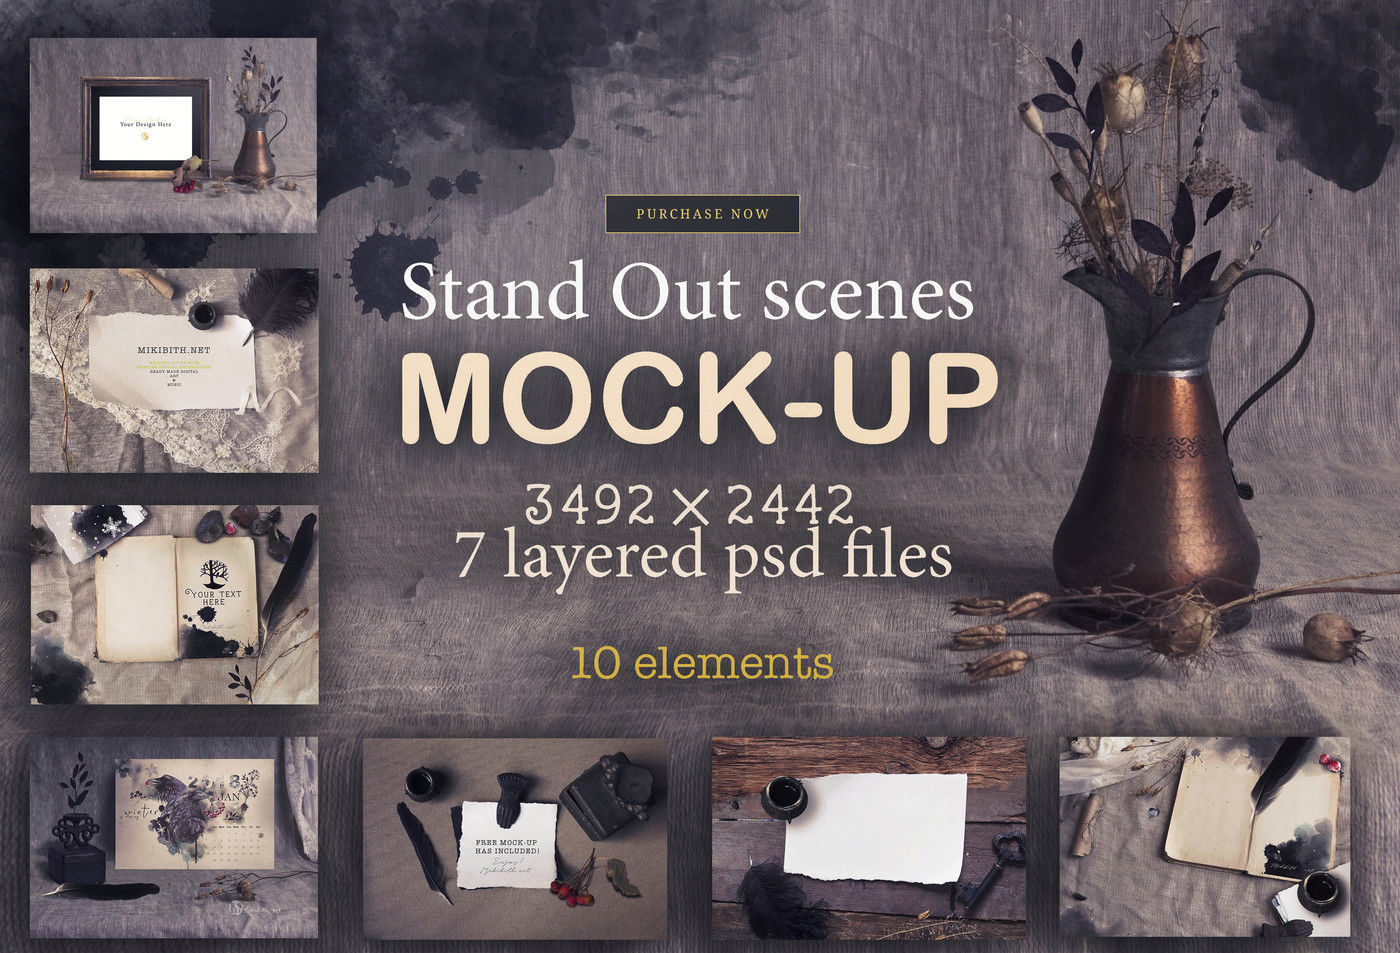 Patch Mockup Psd - Free Mockups | PSD Template | Design Assets